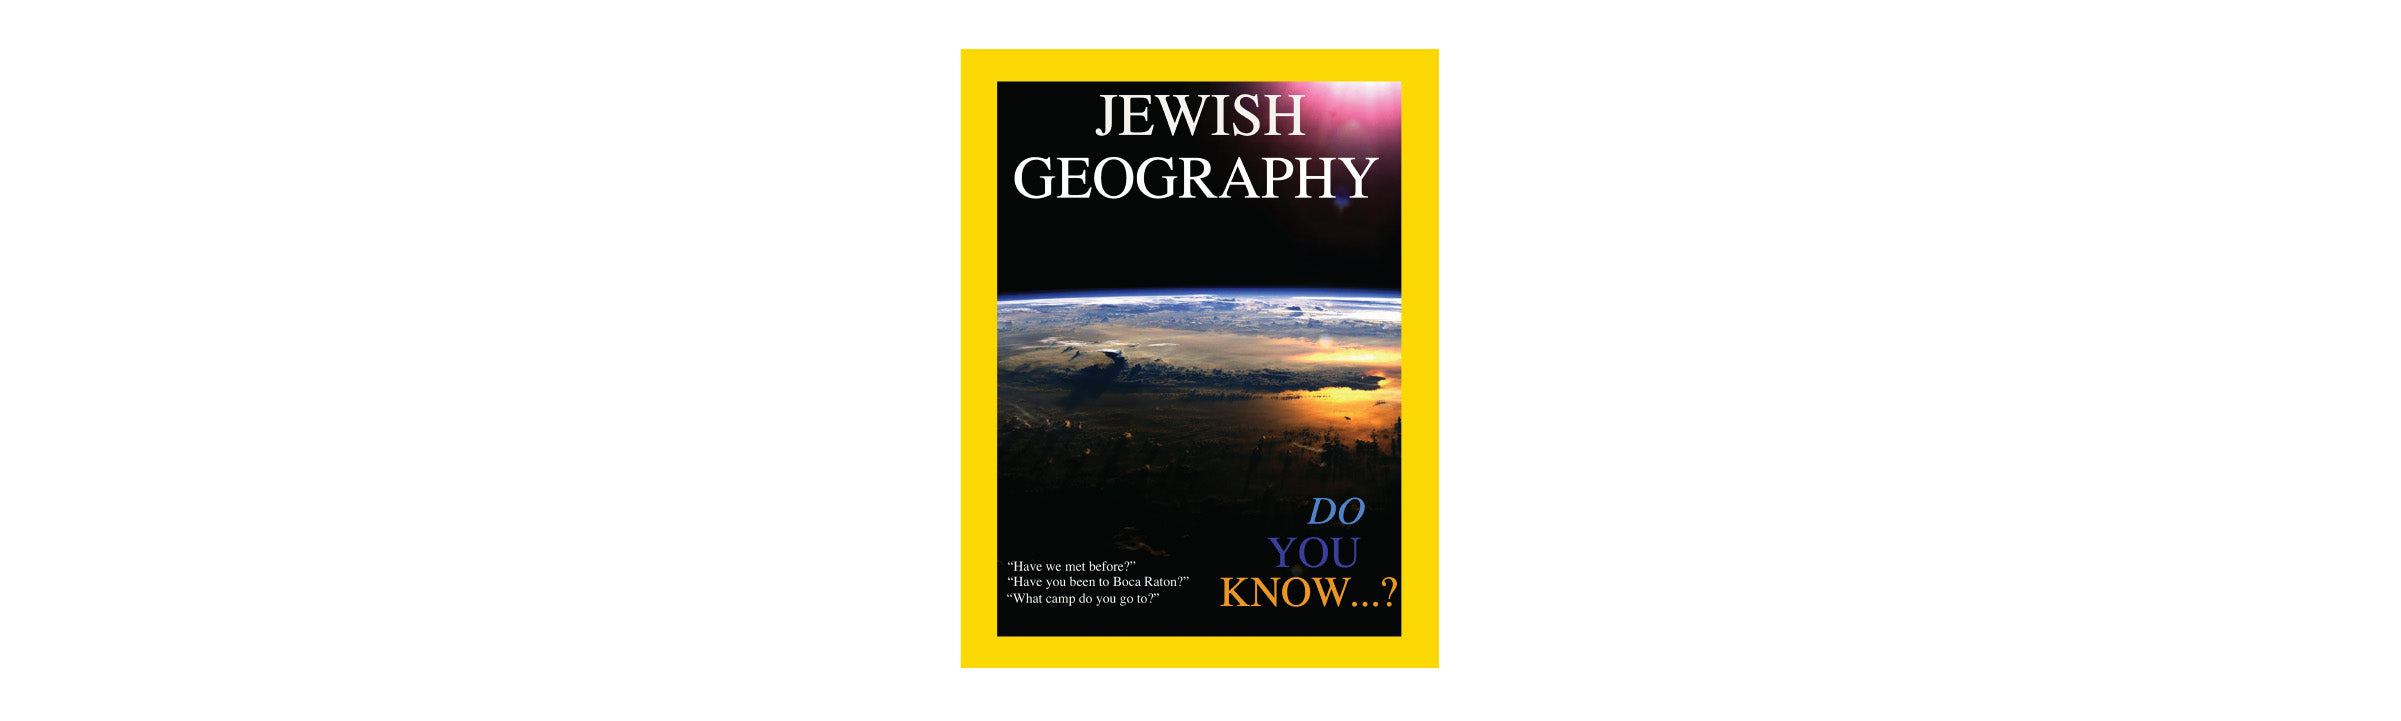 JEWISH GEOGRAPHY